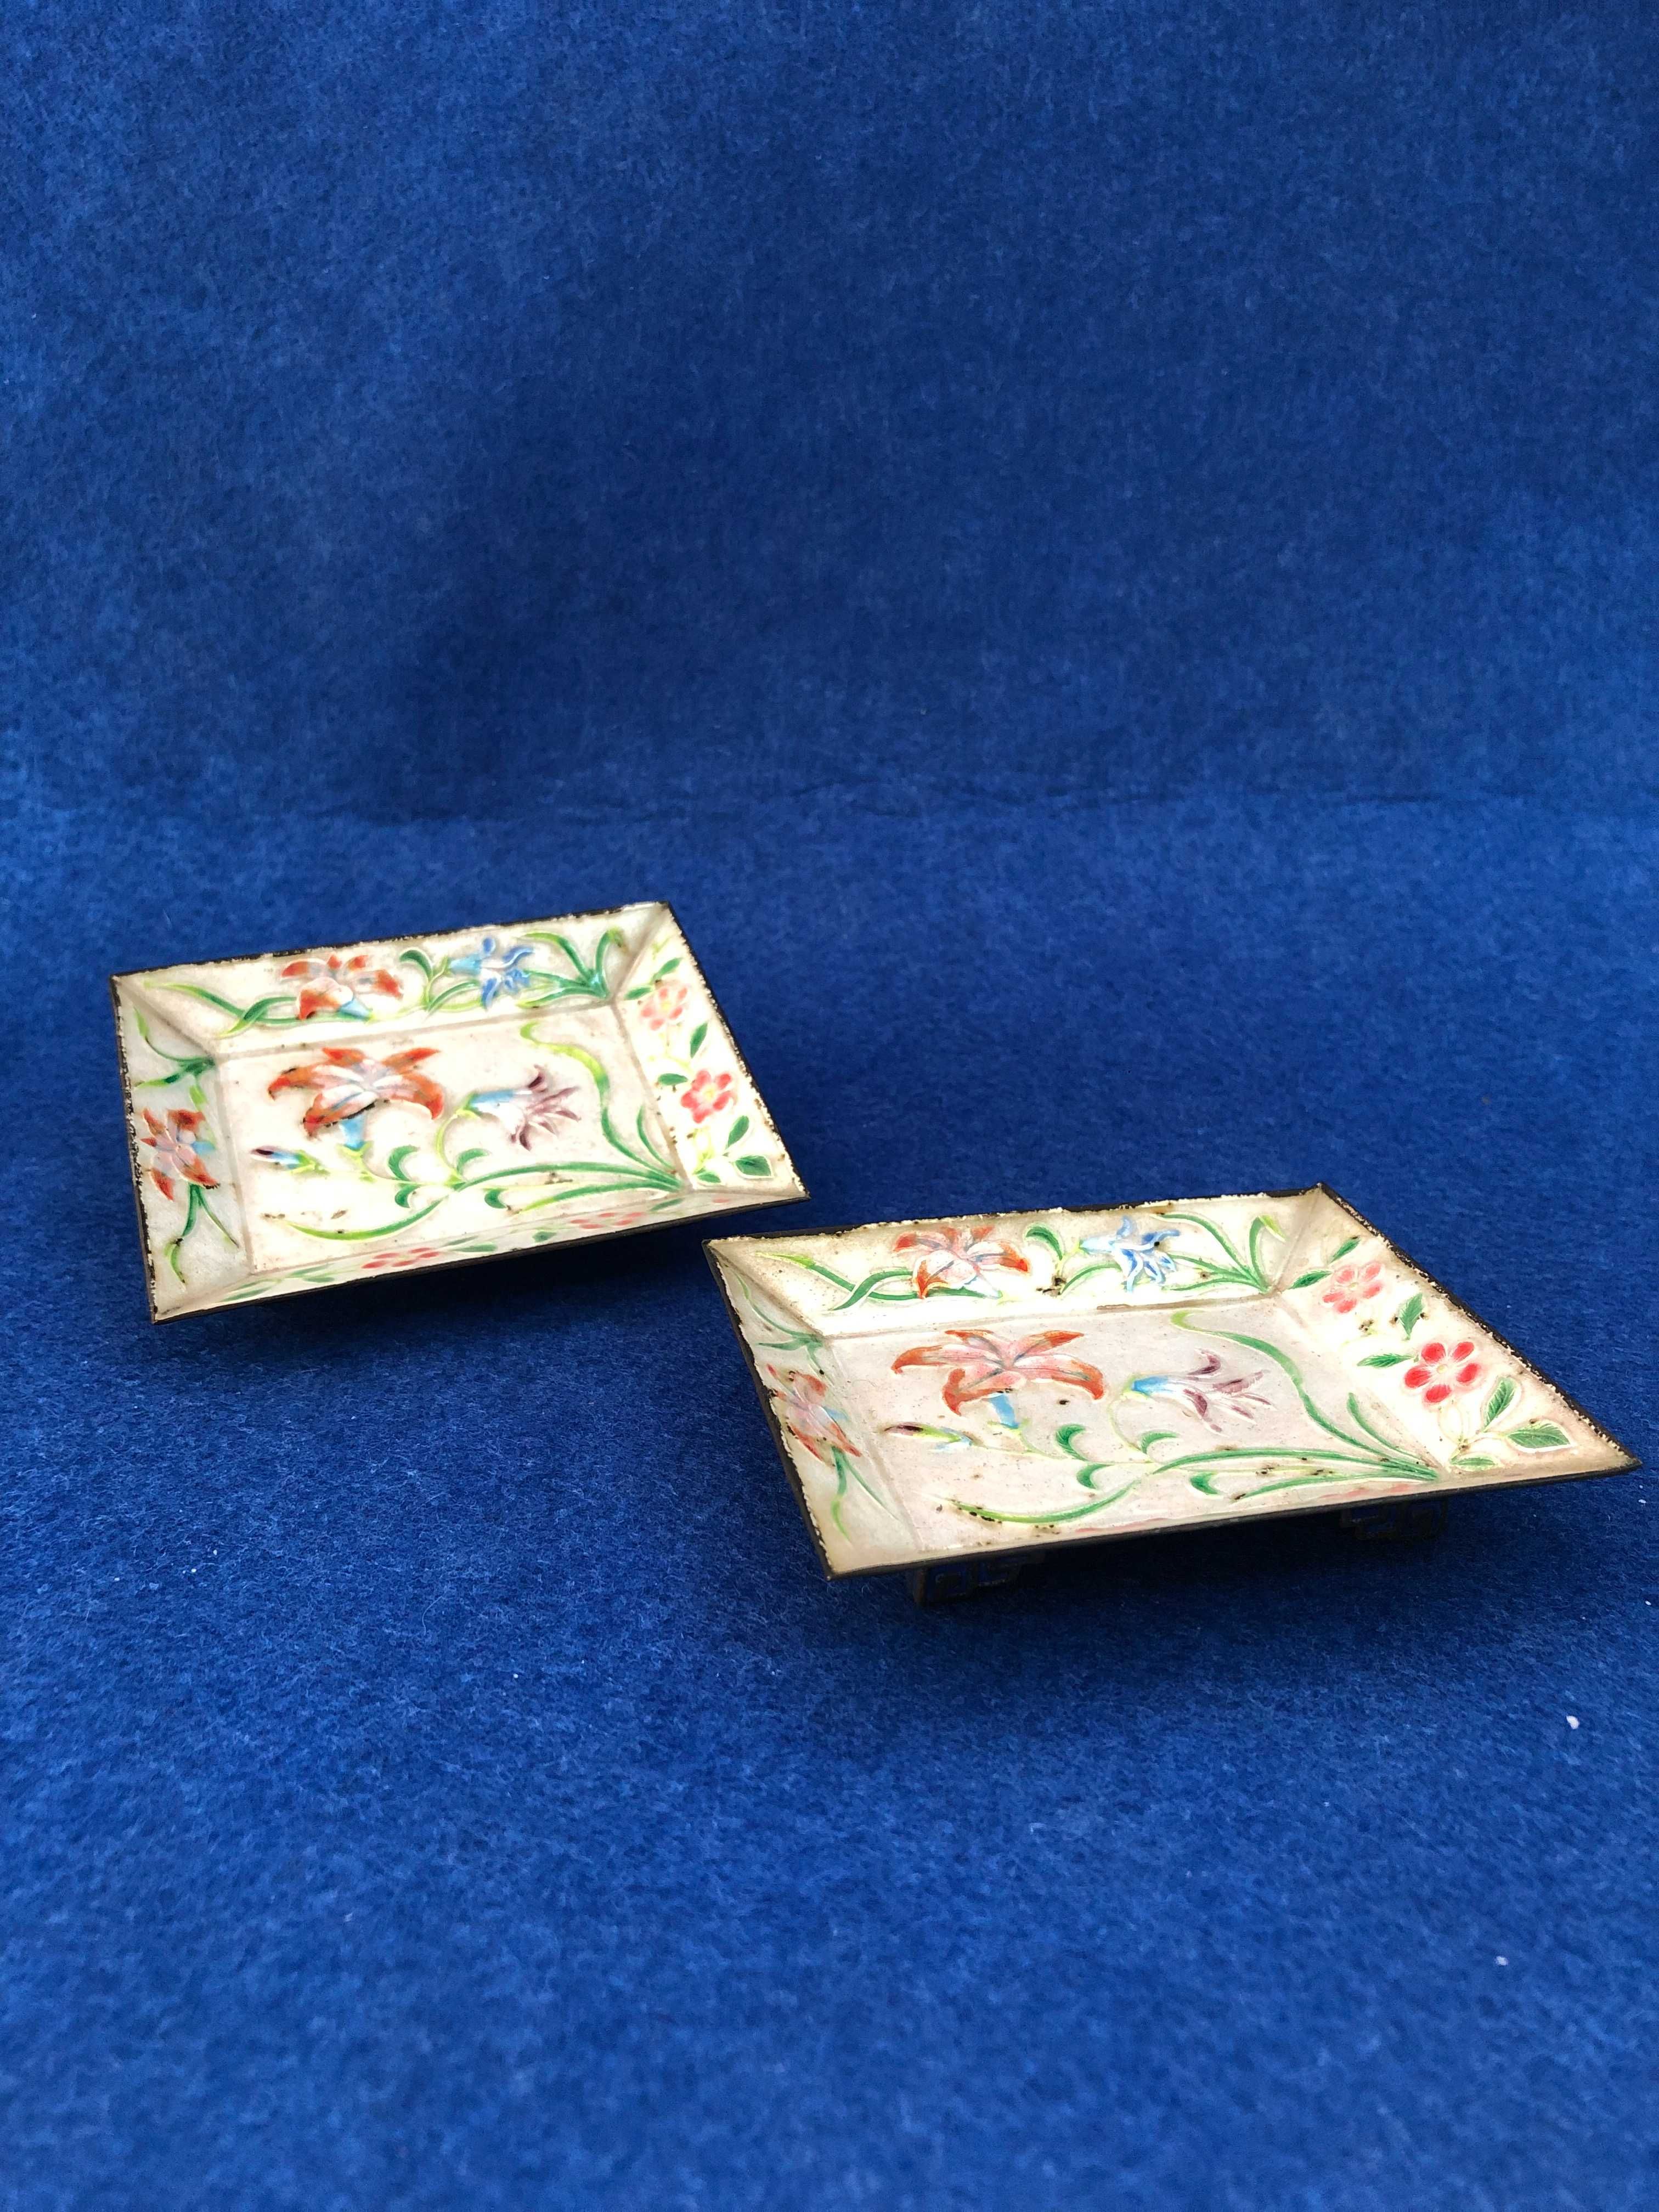 Conjunto de dois peq. covilhetes em esmalte relevado chineses